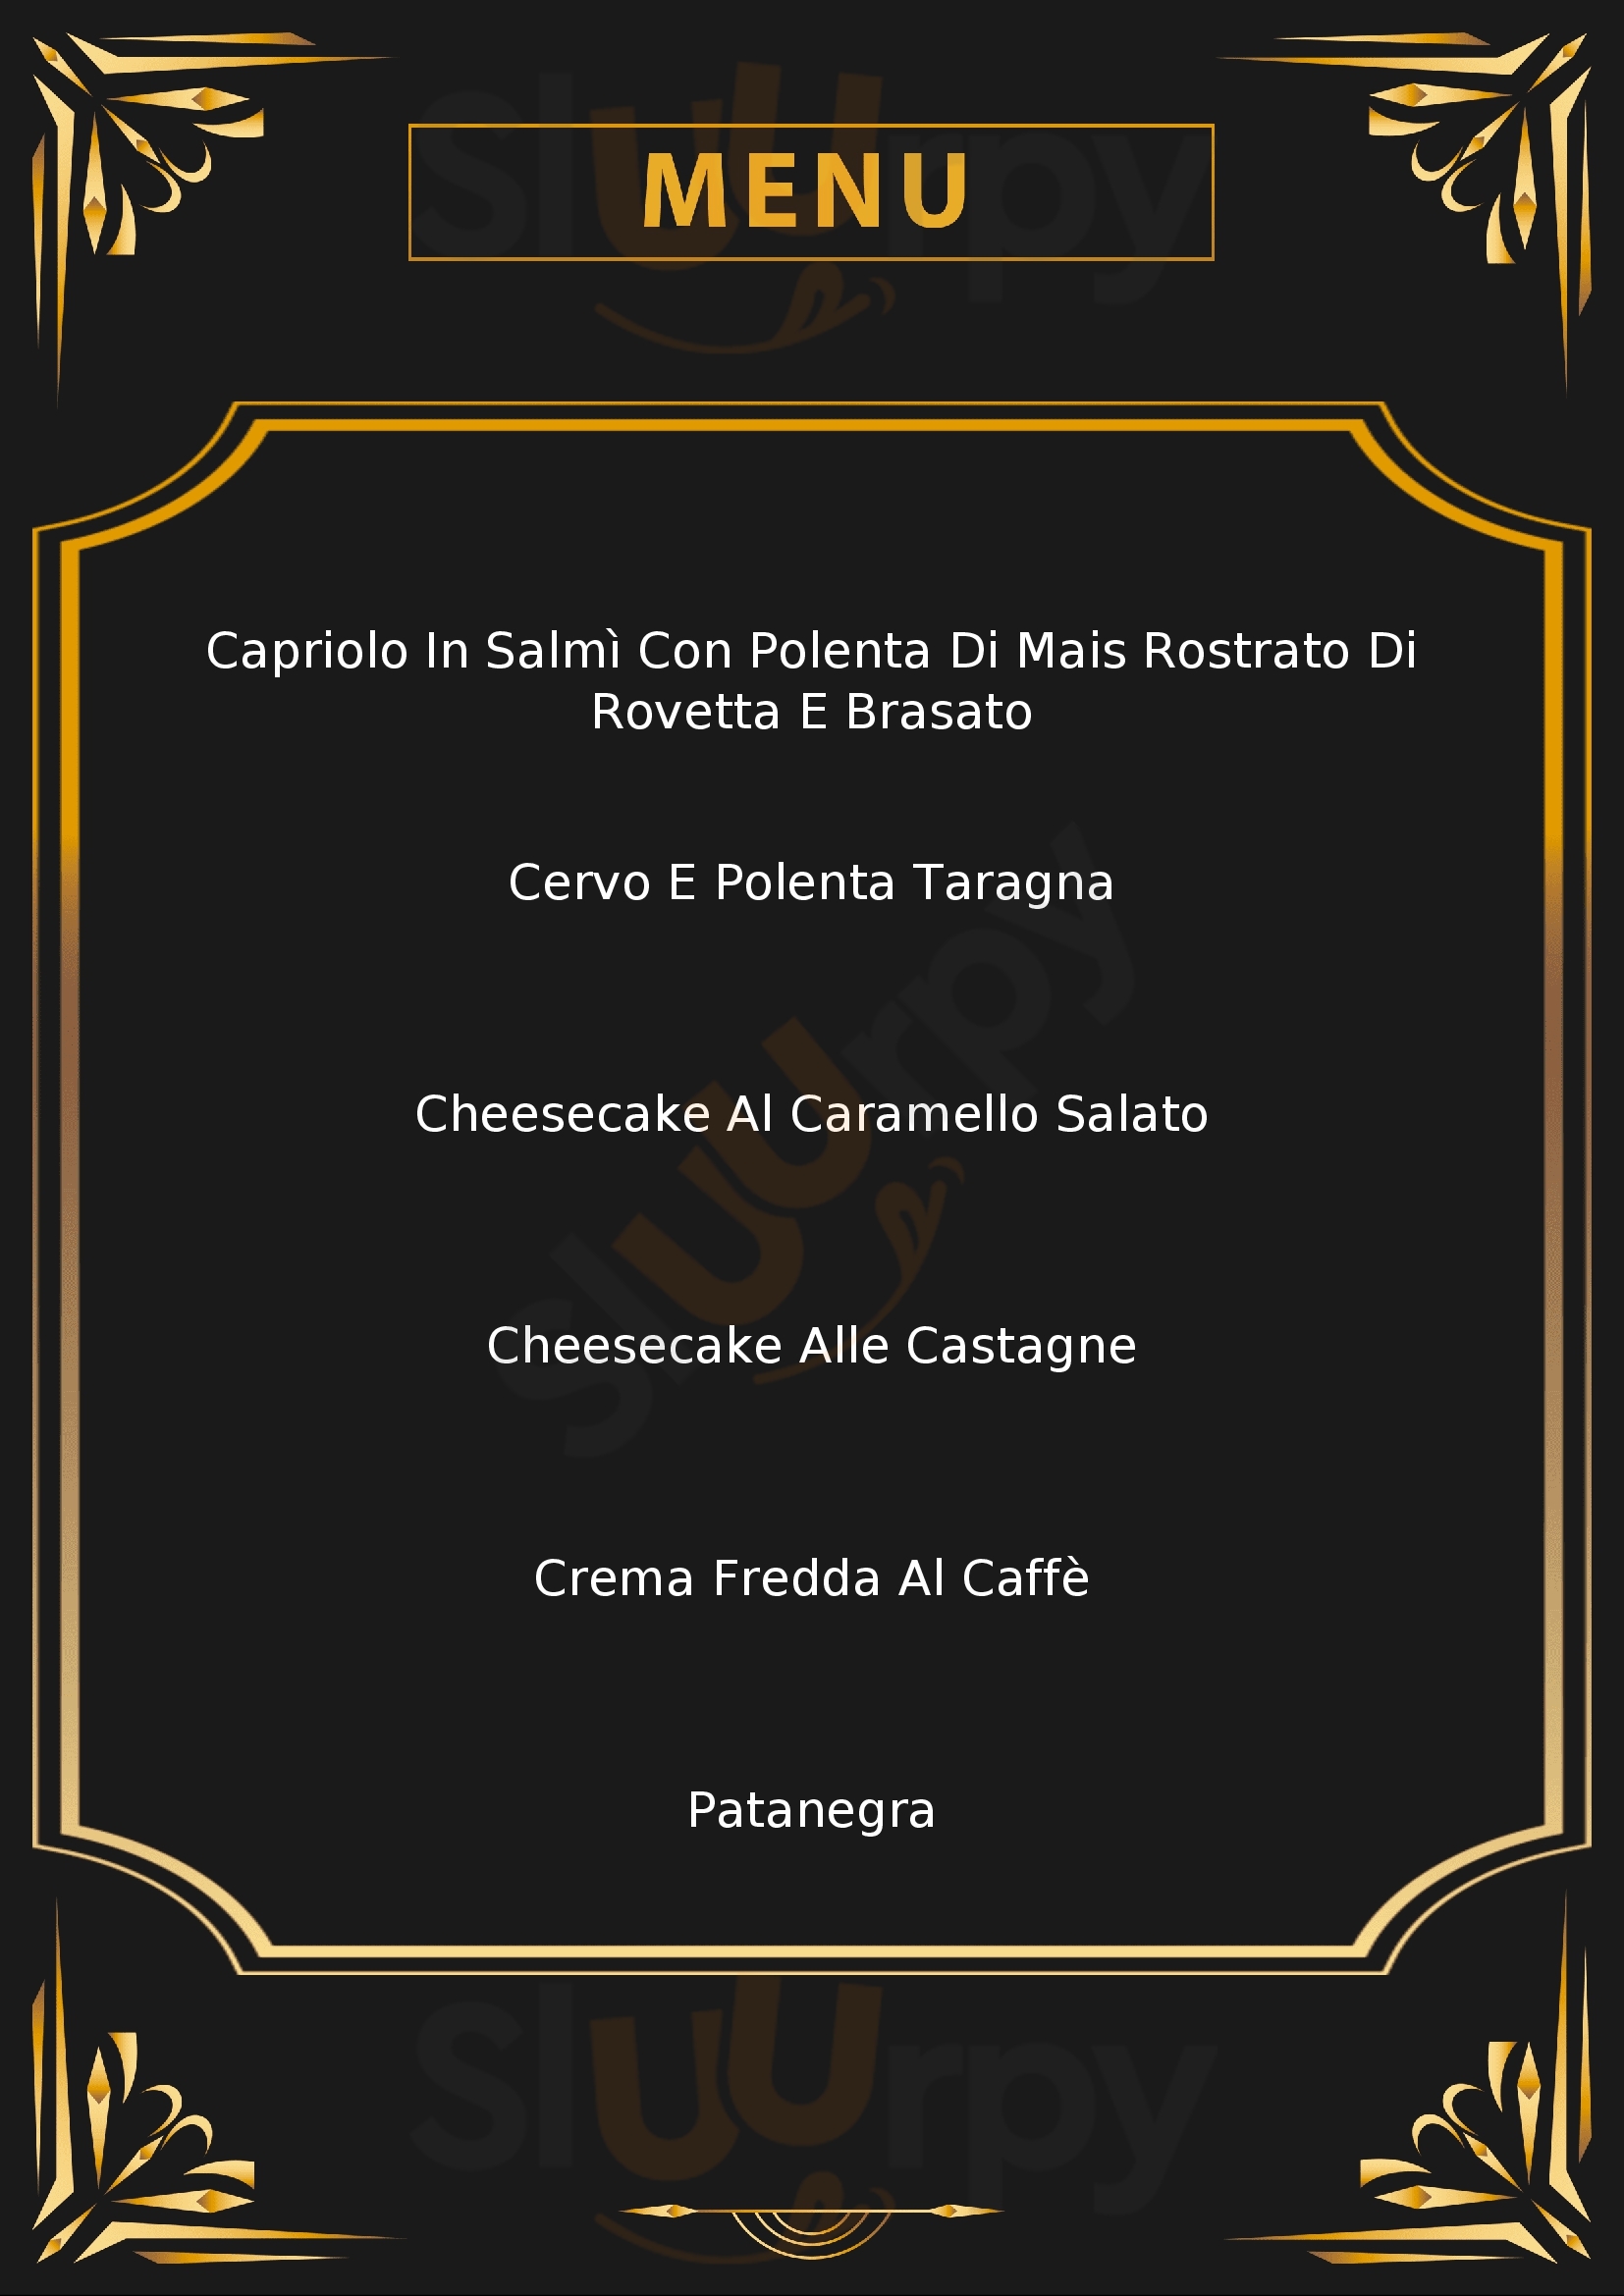 La Taverna Rottigni Serina menù 1 pagina